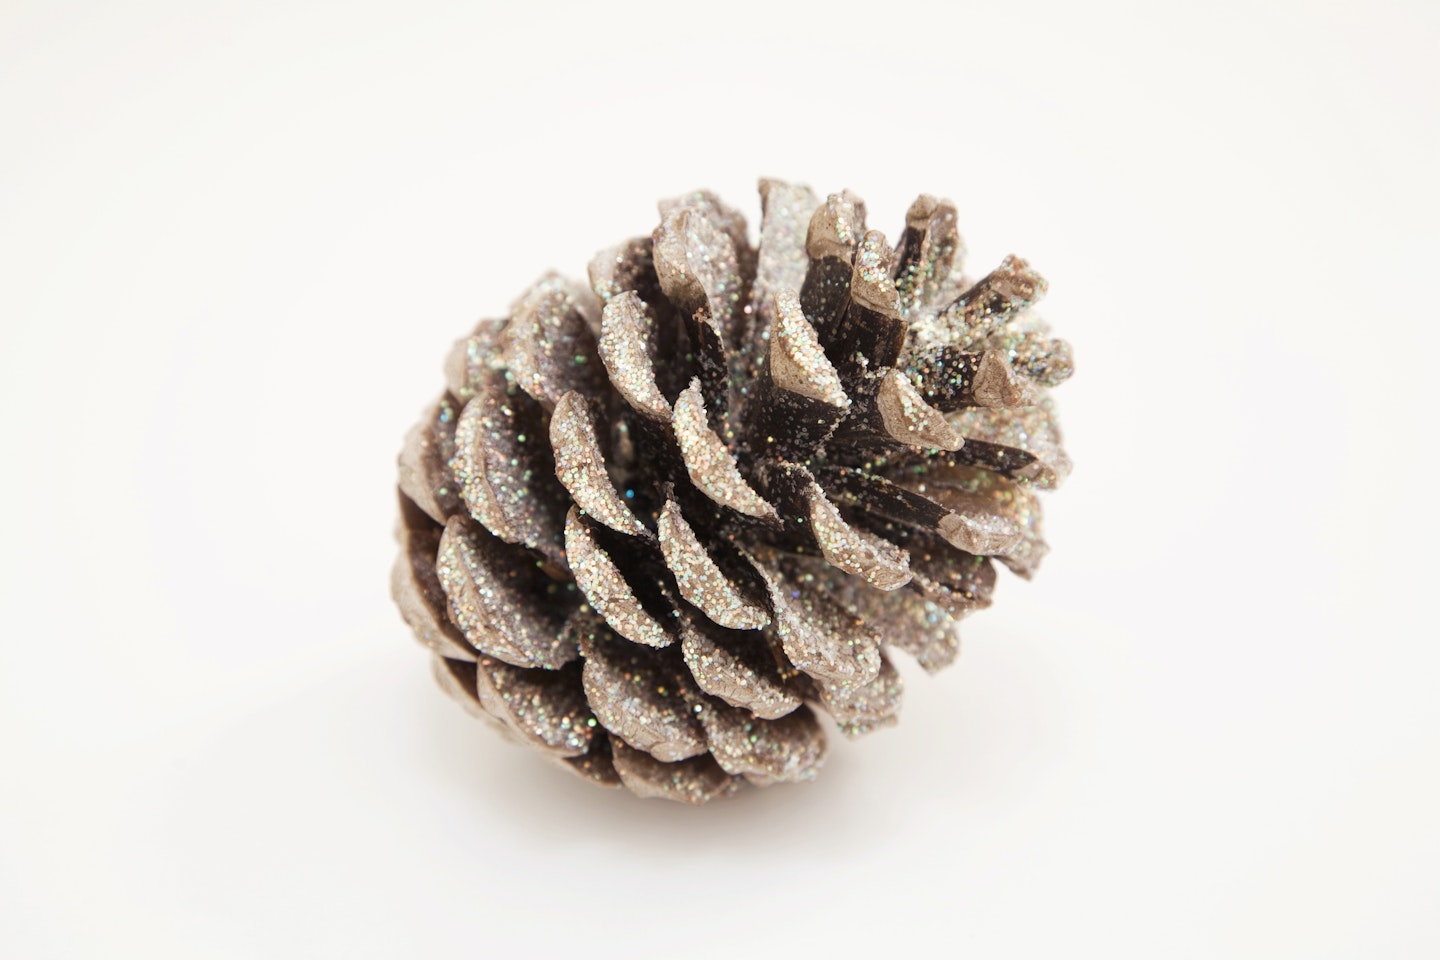 Pine cone with glitter